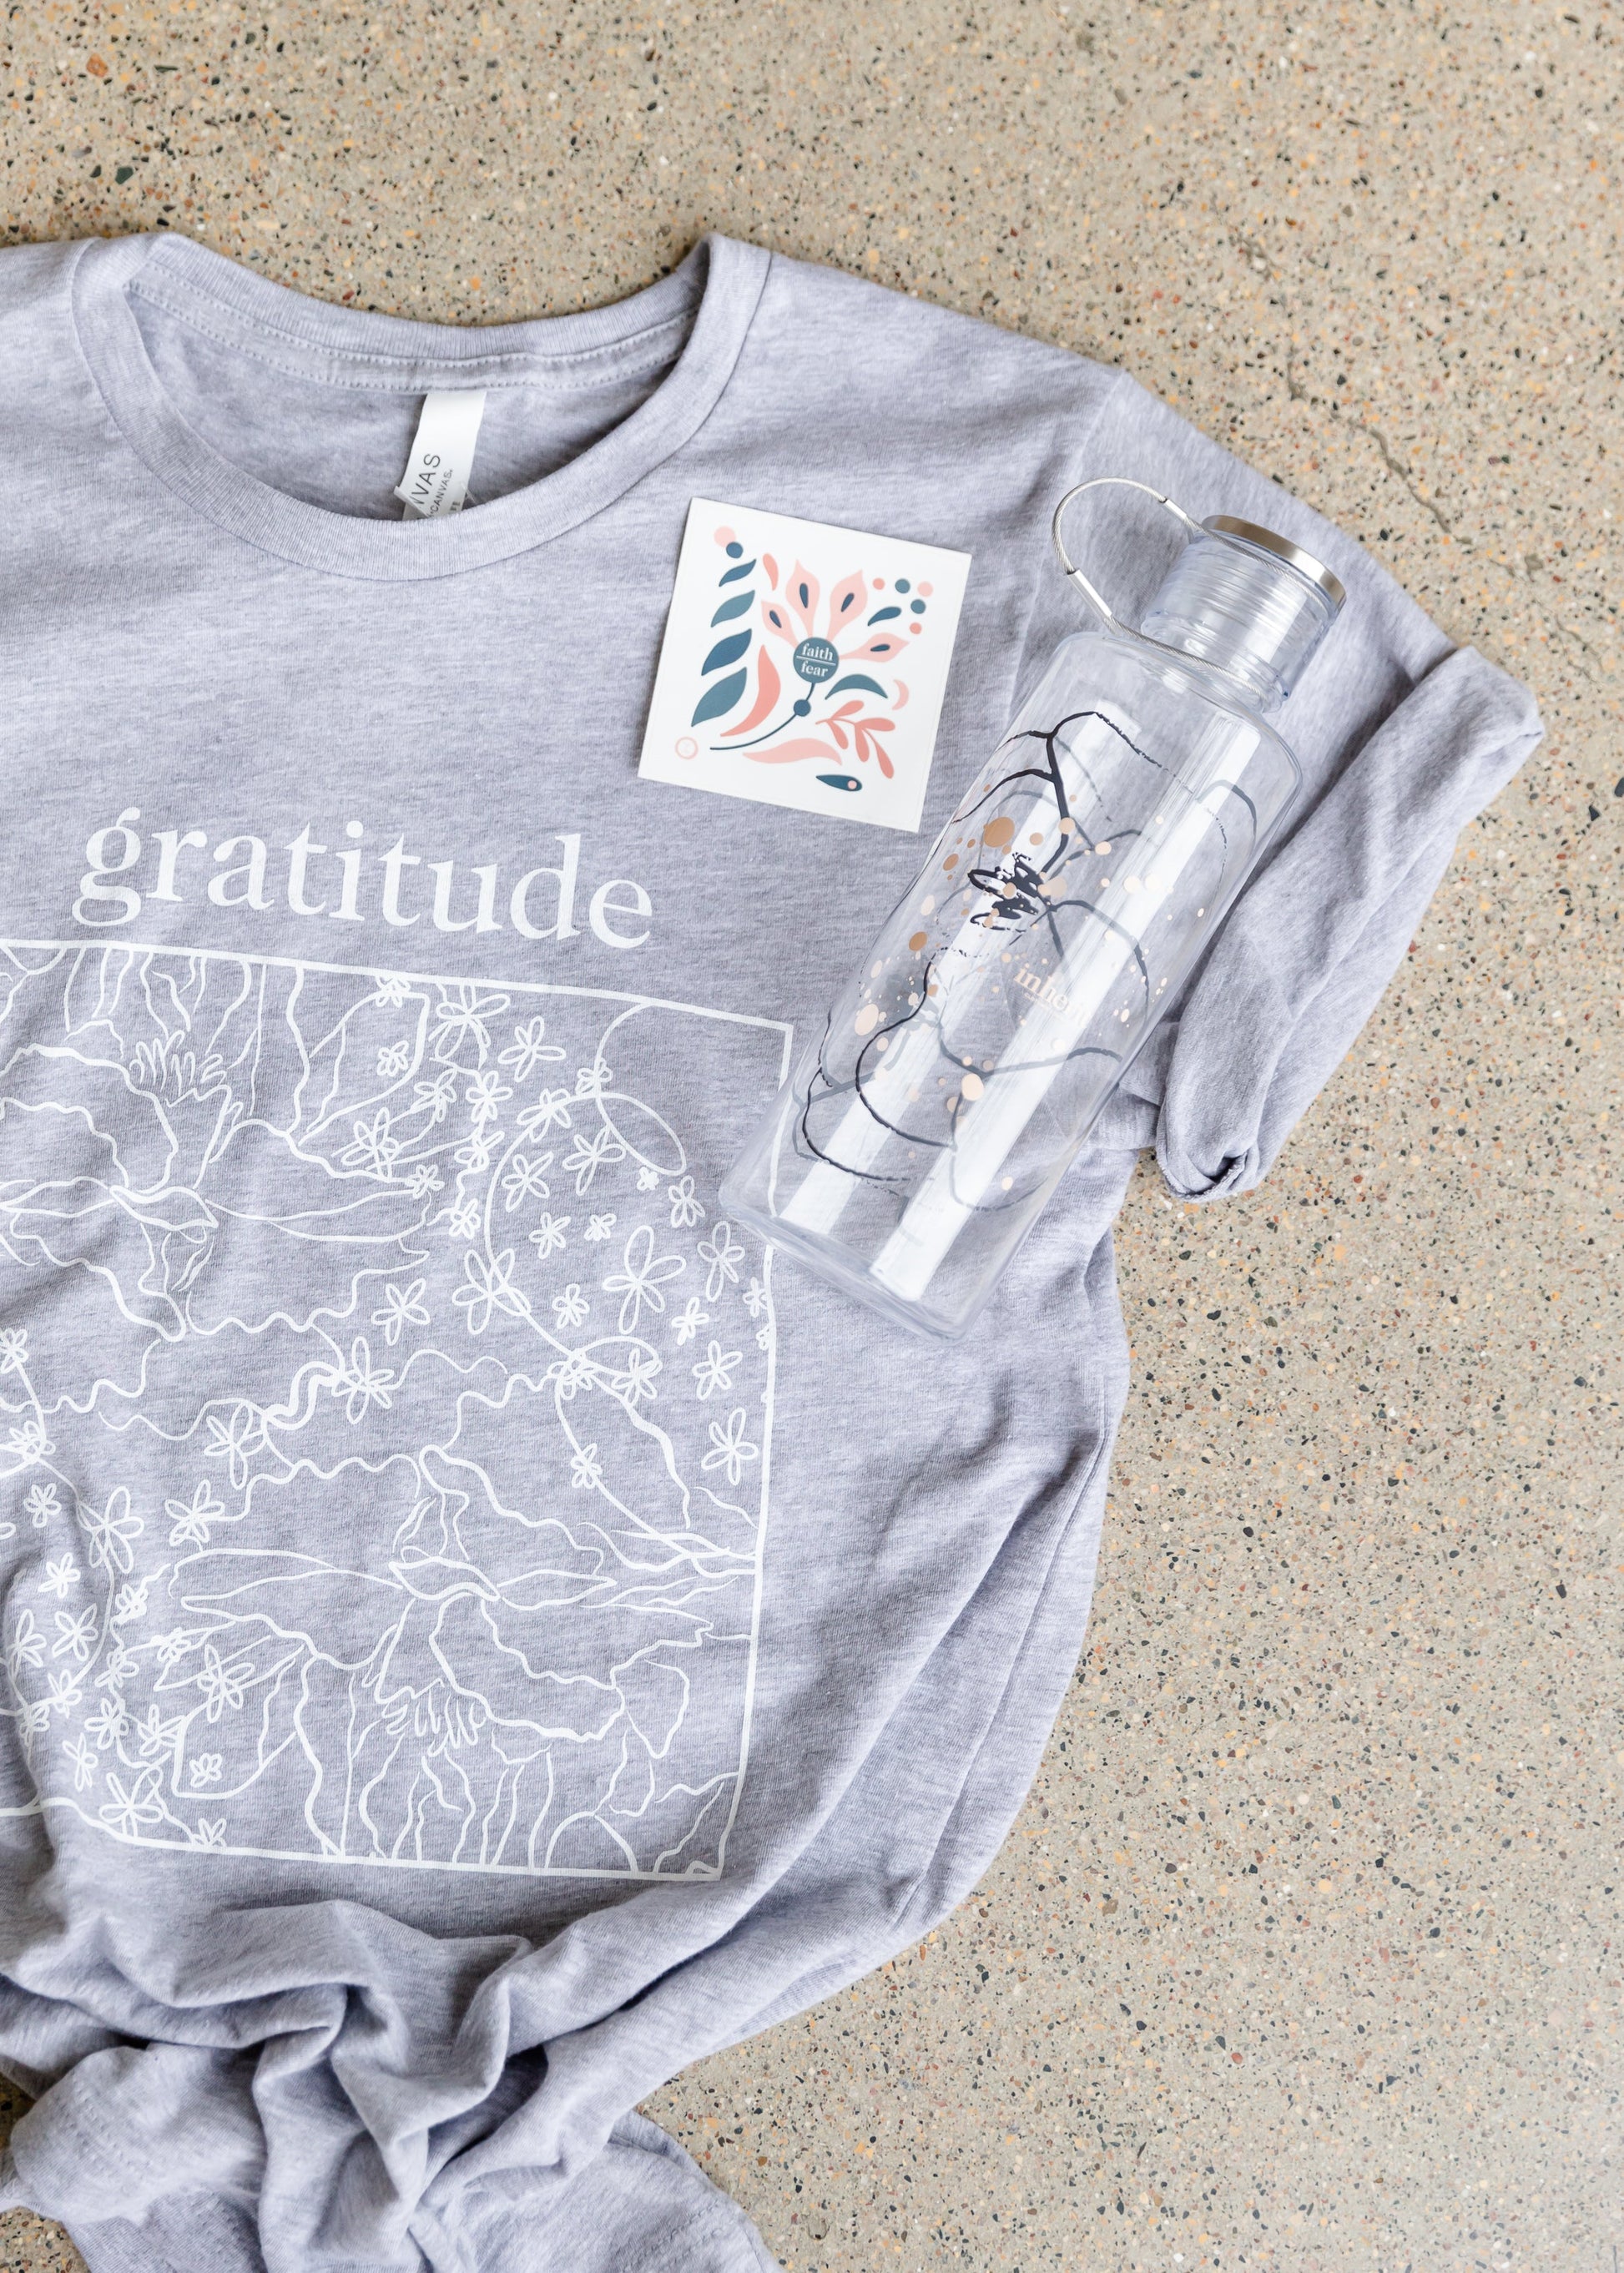 Gratitude Gray Gift Bundle Home & Lifestyle